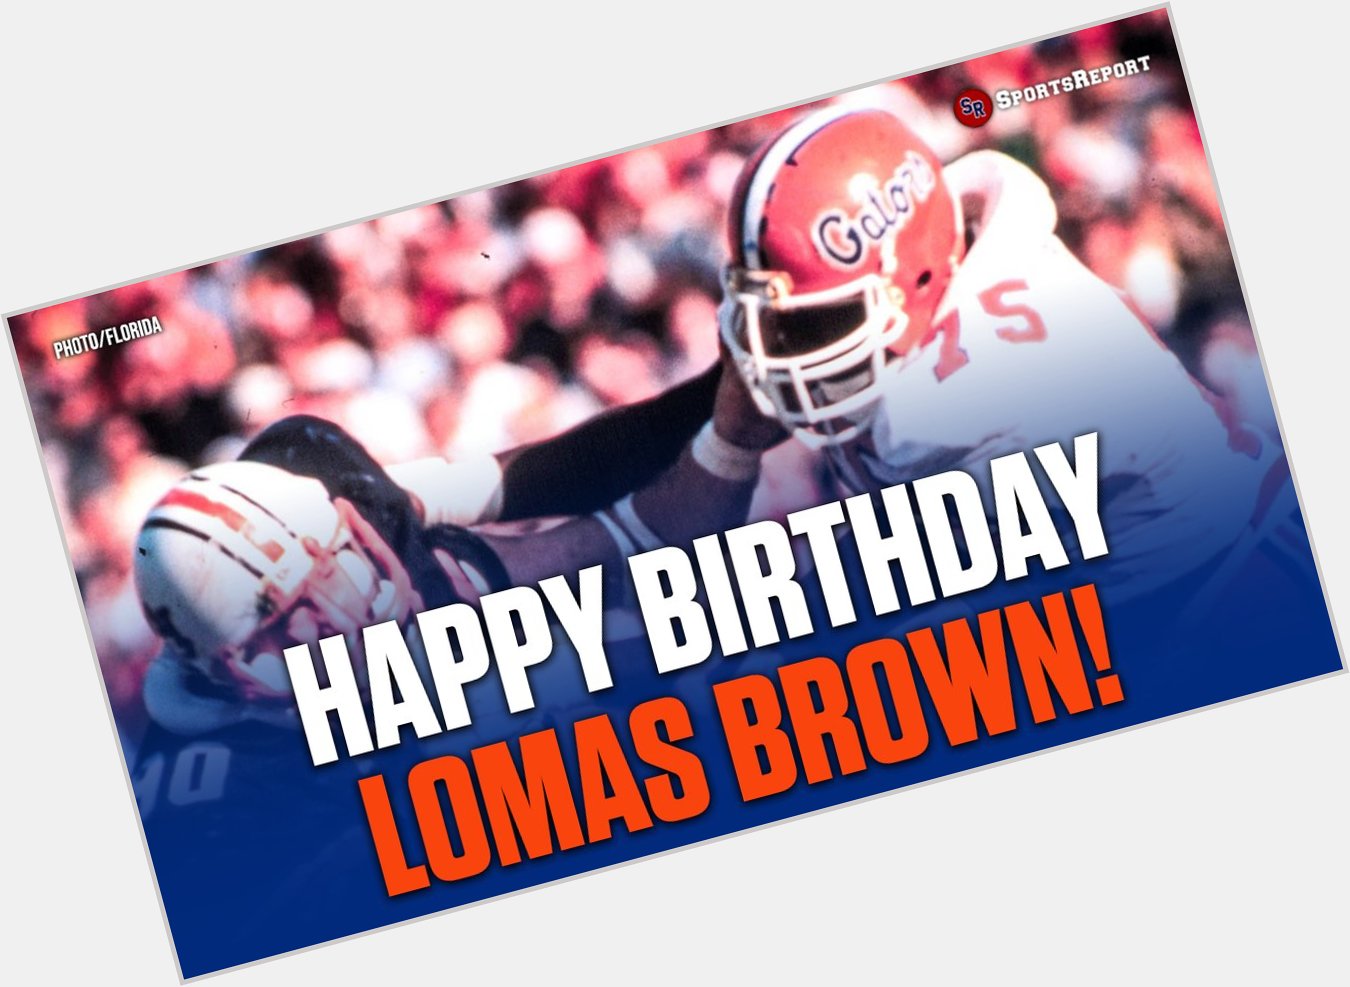  Fans, let\s wish Legend Lomas Brown a Happy Birthday! 